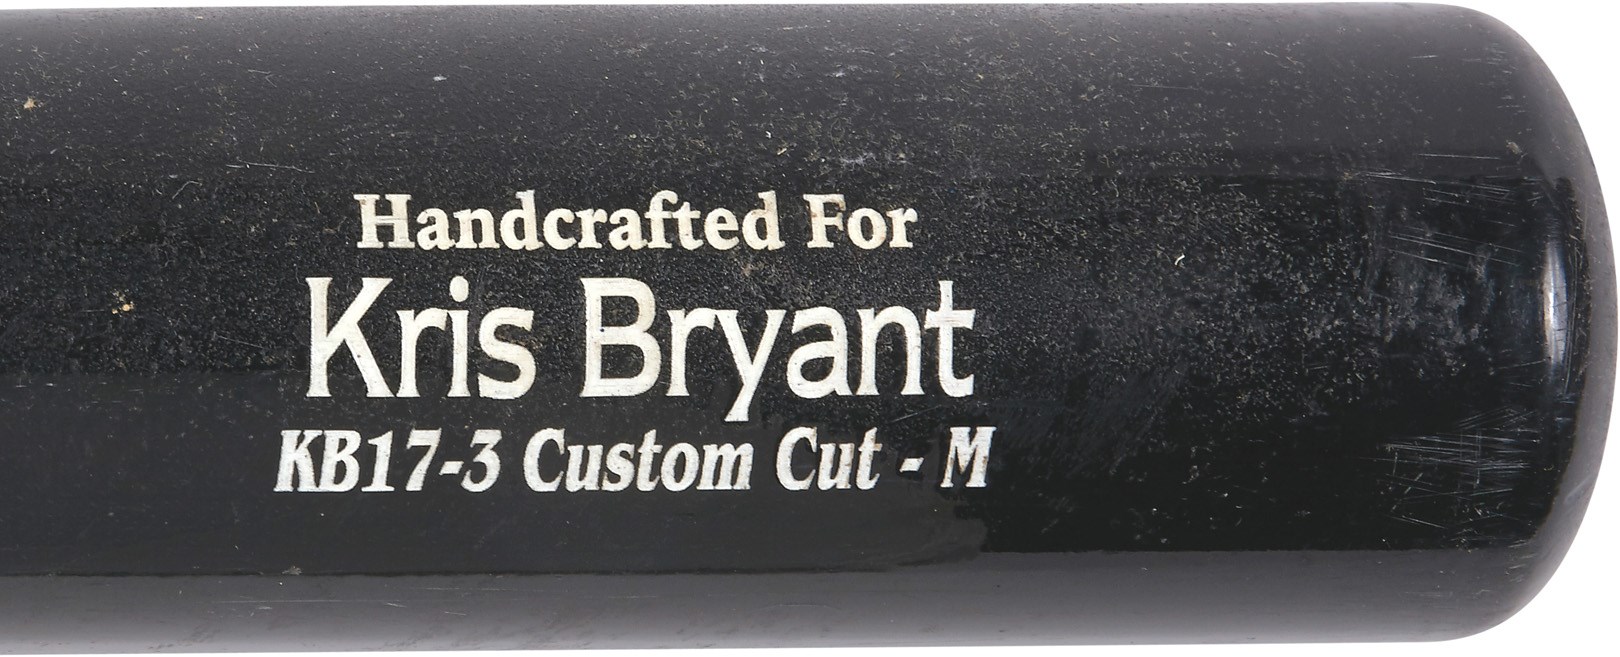 Chicago Cubs & Wrigley Field - 2016 World Champion Kris Bryant Game Used & Signed Marucci Bat - MVP Season (PSA GU 8)